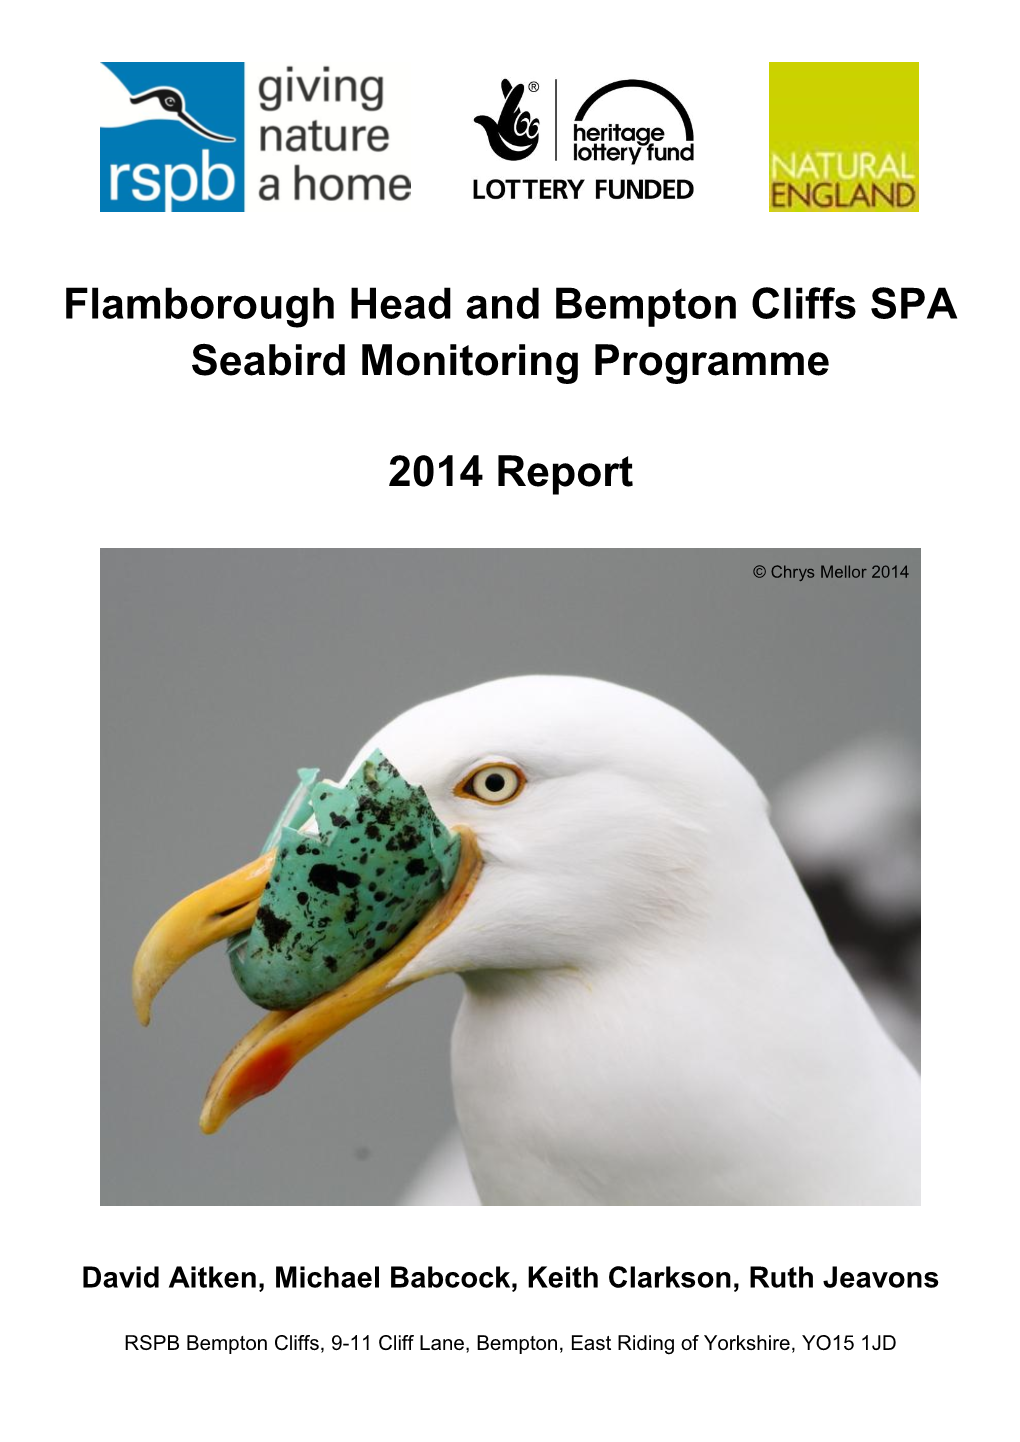 Flamborough Head and Bempton Cliffs SPA Seabird Monitoring Programme